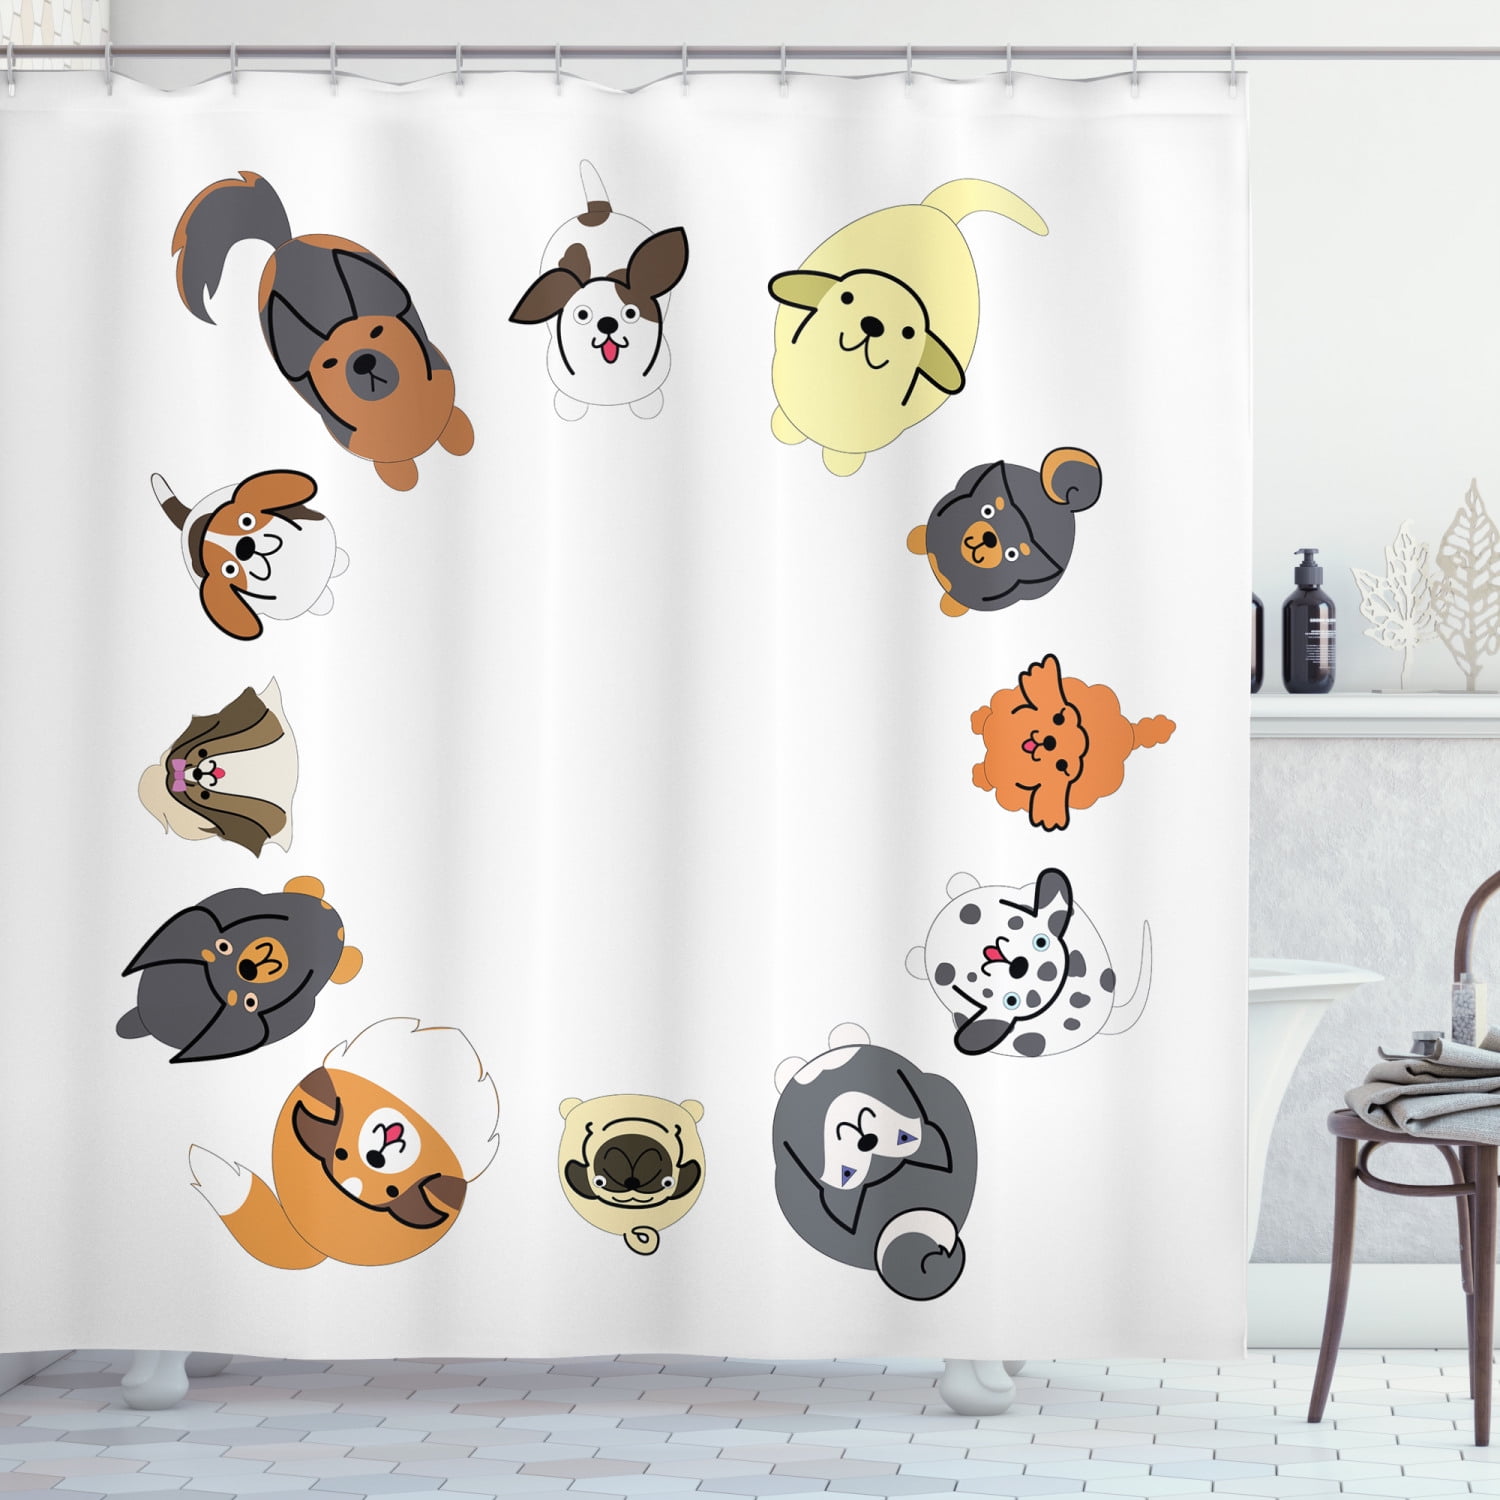 Cals Cat Portrait Cartoon Style Bathroom Fabric Shower Curtain Set With 12 Hooks 